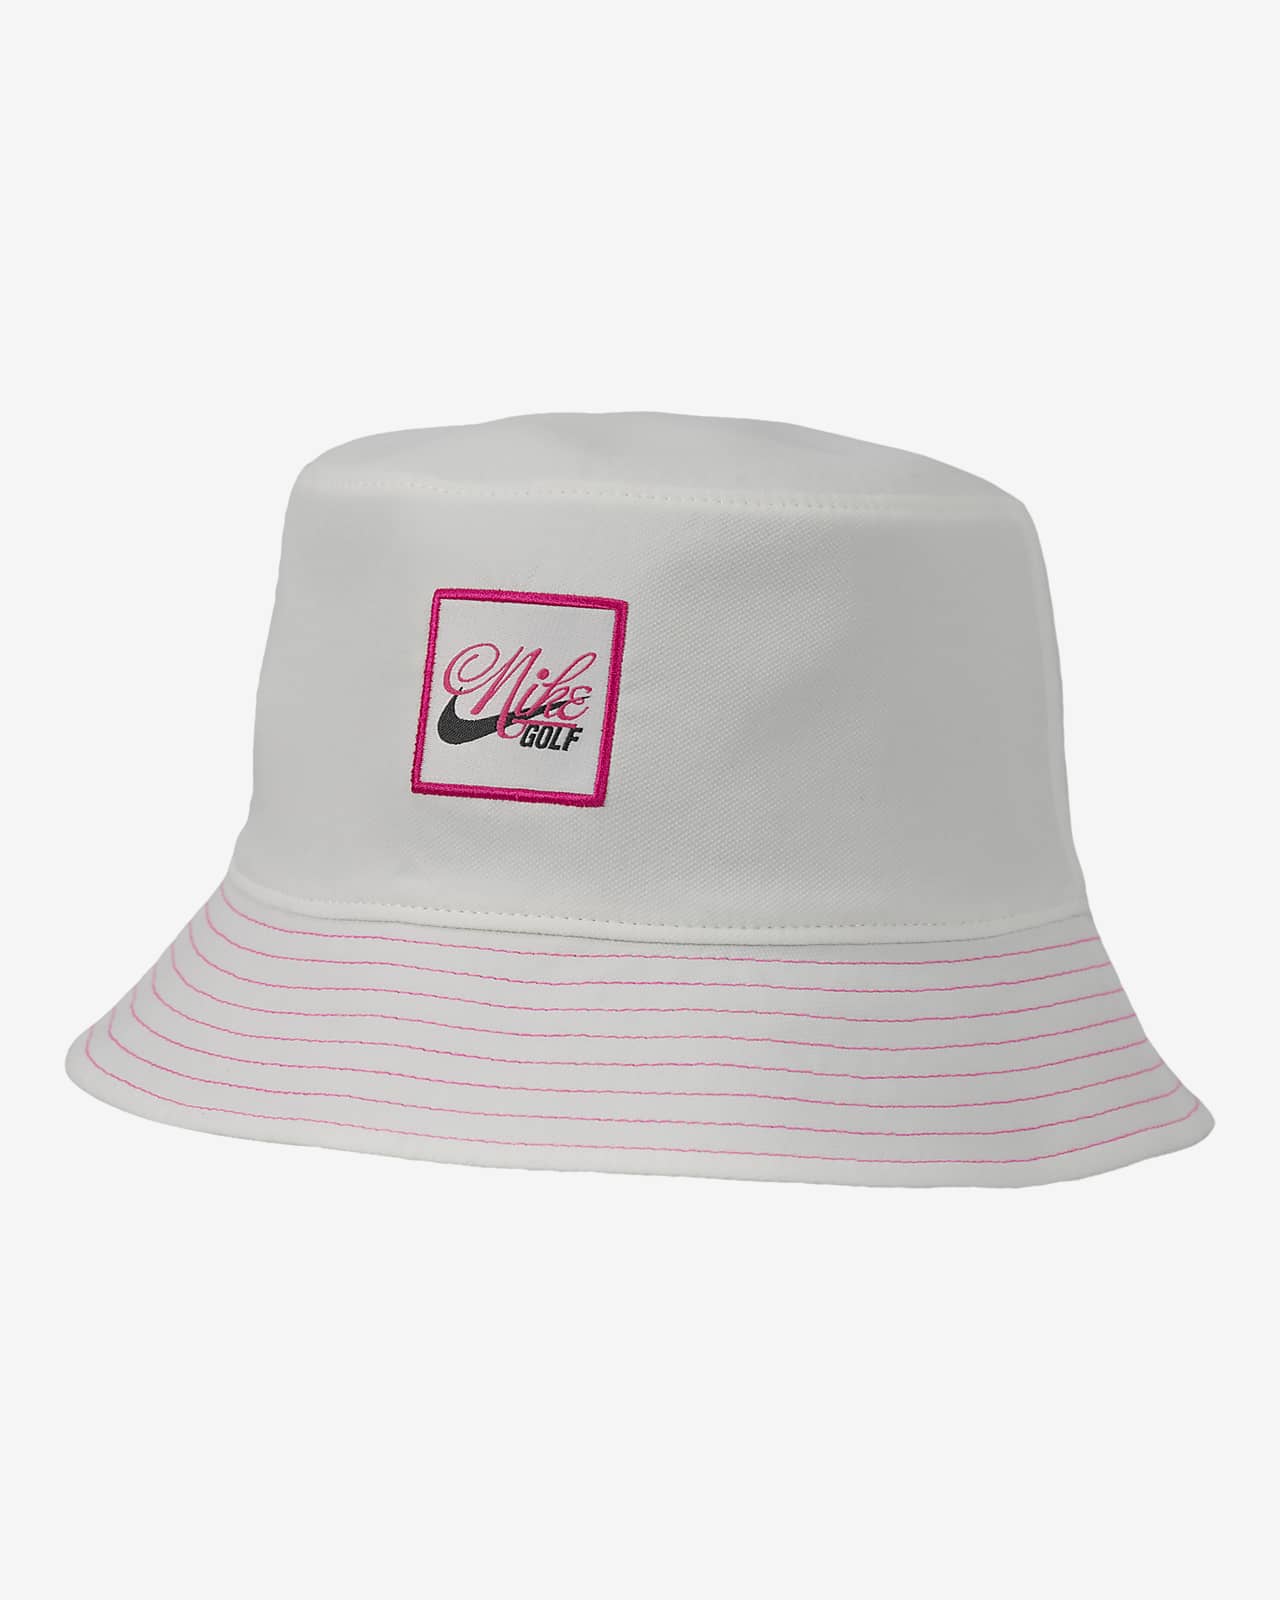 Nike Golf Reversible Hat. Bucket